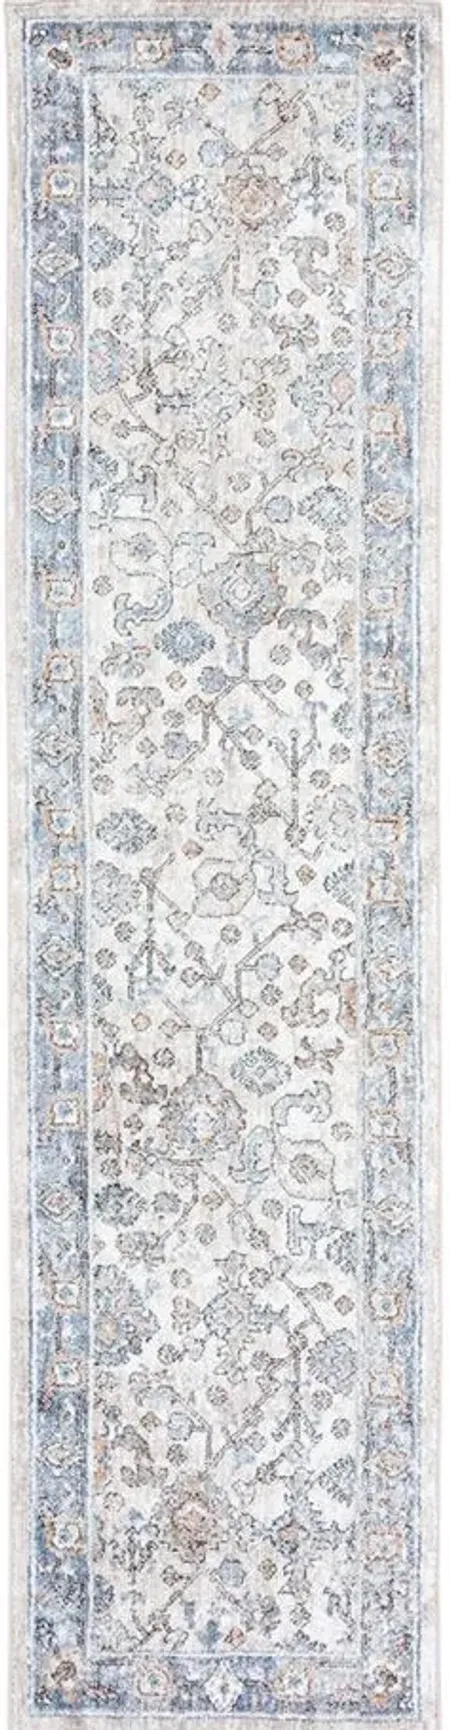 Jasmine Runner Rugs in Ivory & Blue by Safavieh